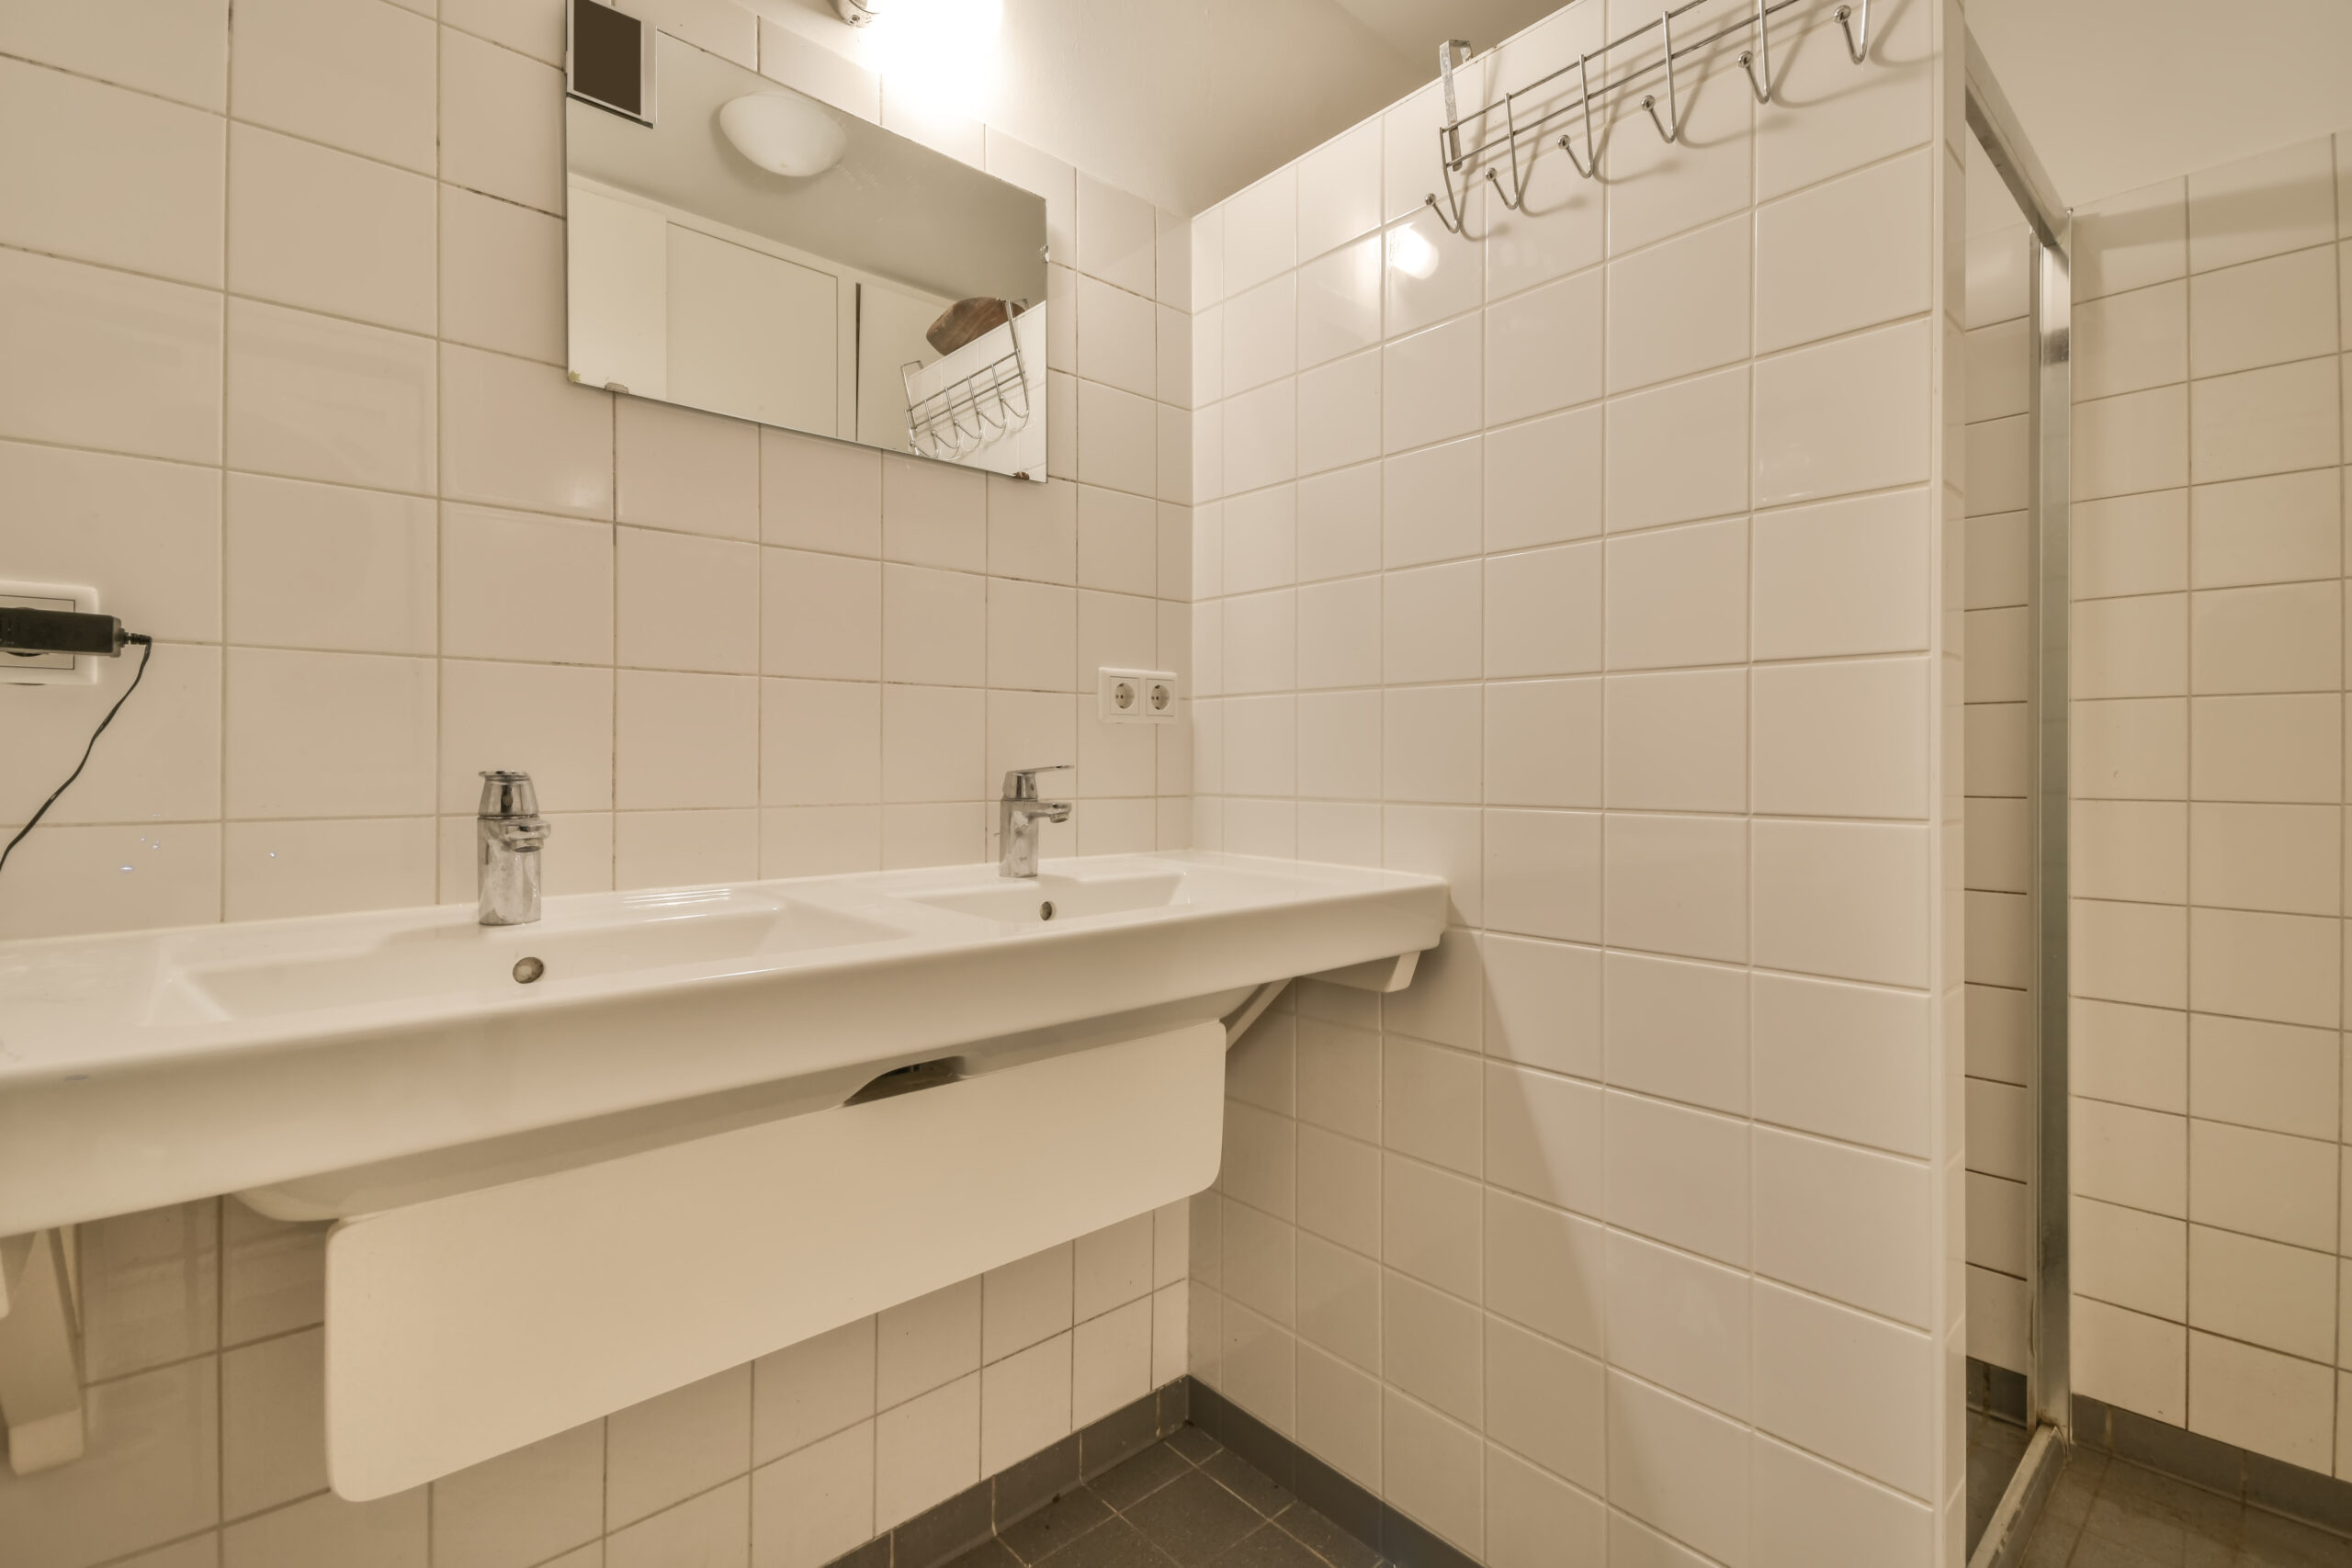 tiled bathroom interior 2023 11 27 04 52 01 utc scaled